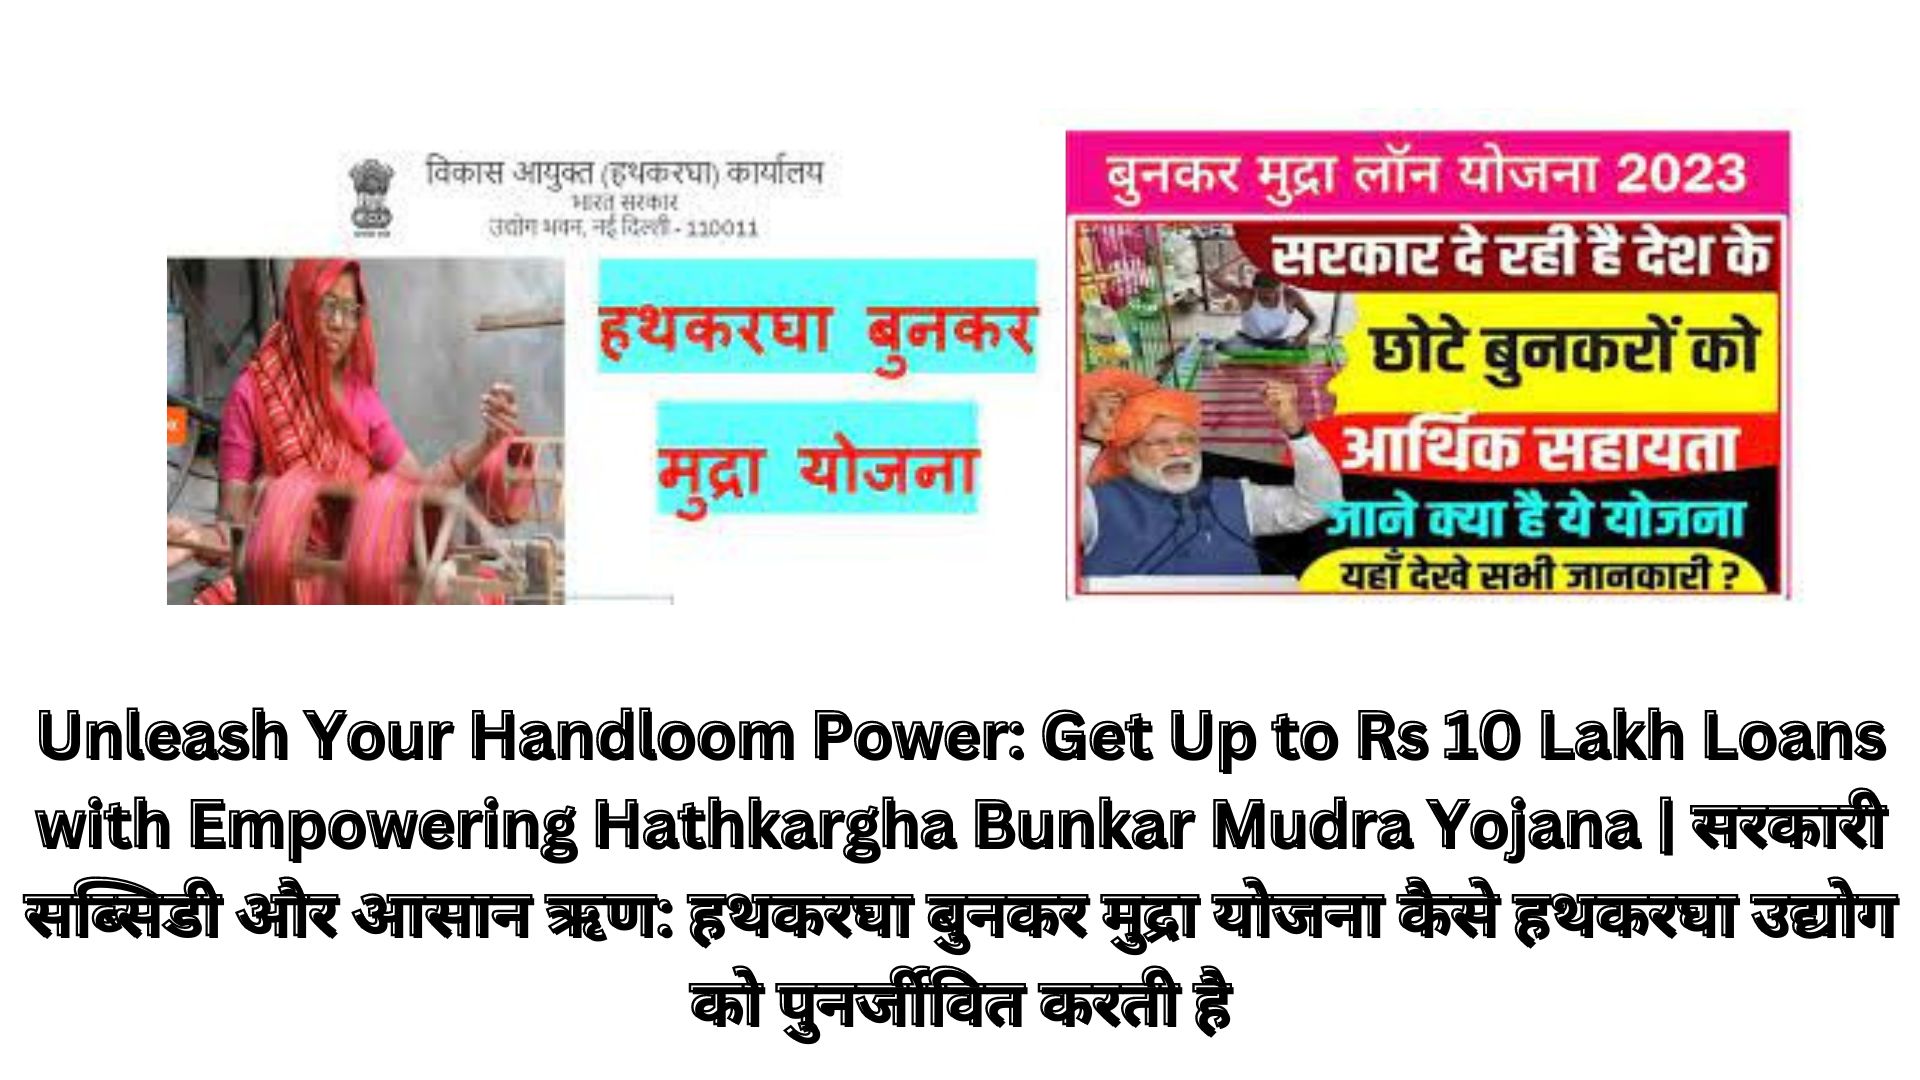 Unleash Your Handloom Power: Get Up to Rs 10 Lakh Loans with Empowering Hathkargha Bunkar Mudra Yojana | सरकारी सब्सिडी और आसान ऋण: हथकरघा बुनकर मुद्रा योजना कैसे हथकरघा उद्योग को पुनर्जीवित करती है